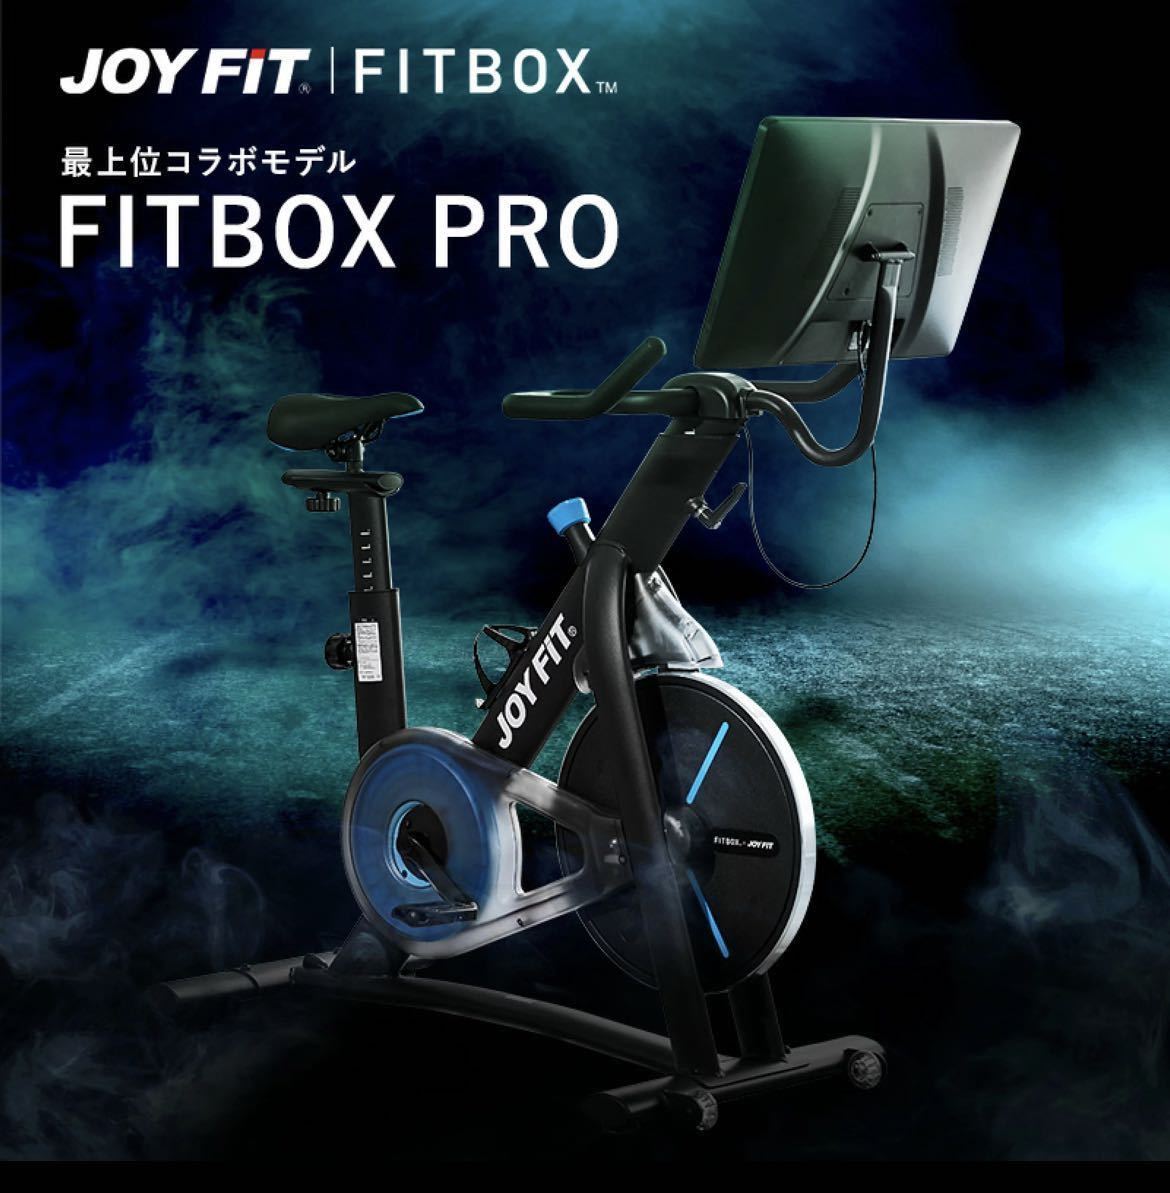 FITBOX Pro 特別モデル JOYFIT コラボ maarks.in